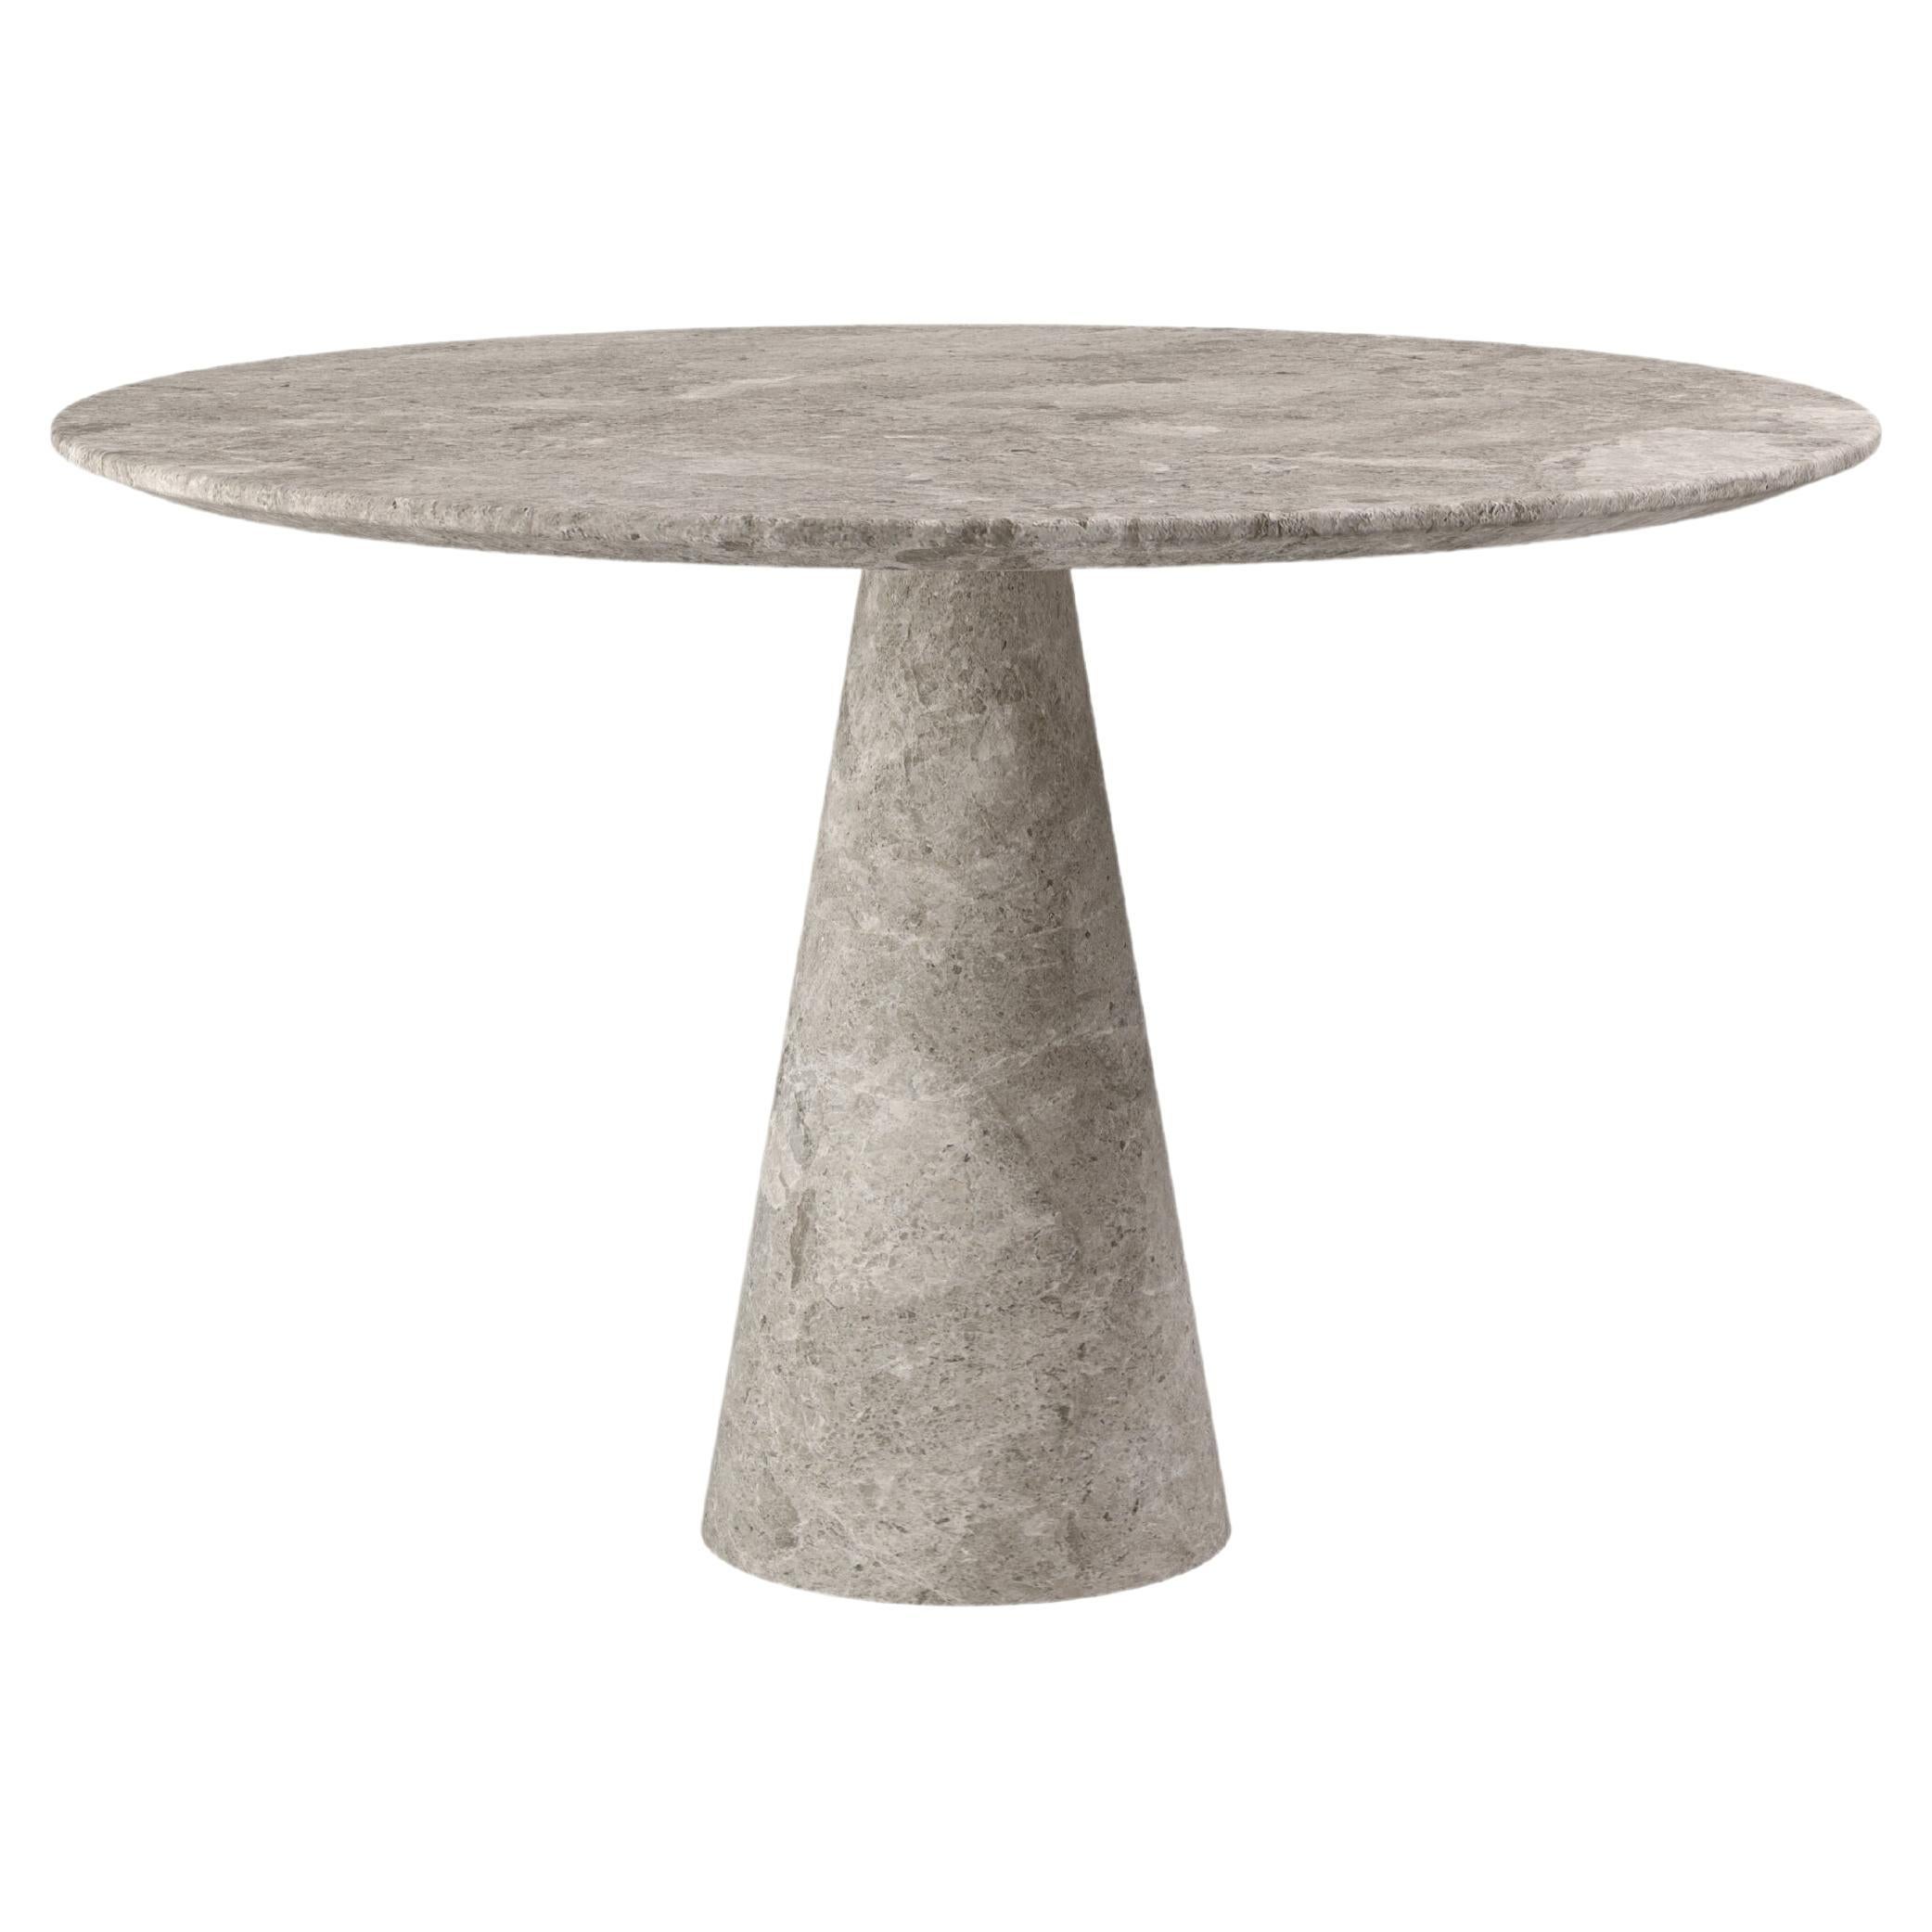 FORM(LA) Cono Round Dining Table 48”L x 48”W x 30”H Tundra Gray Marble For Sale